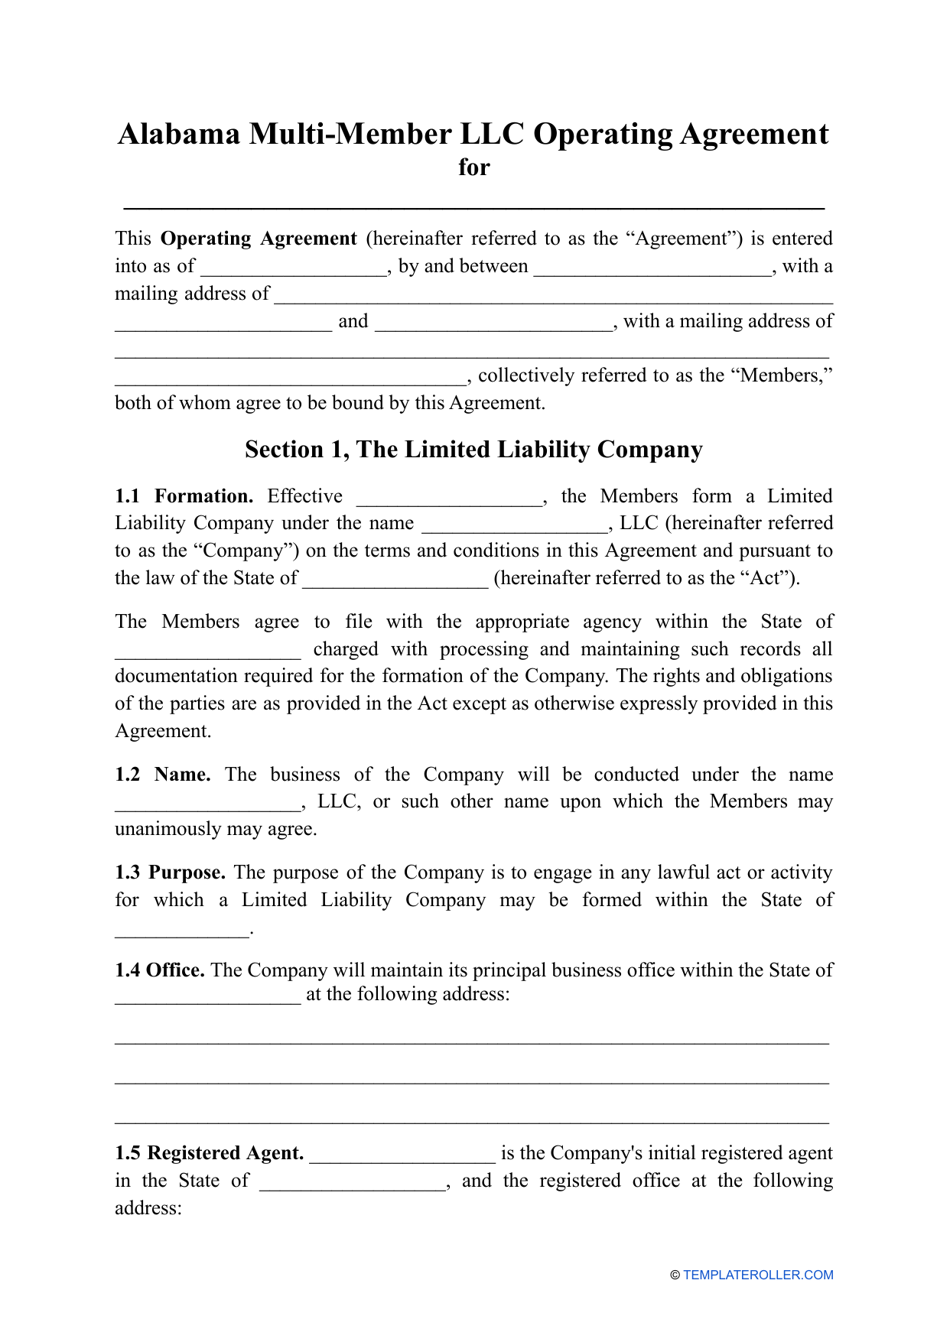 Multi-Member LLC Operating Agreement Template - Alabama, Page 1